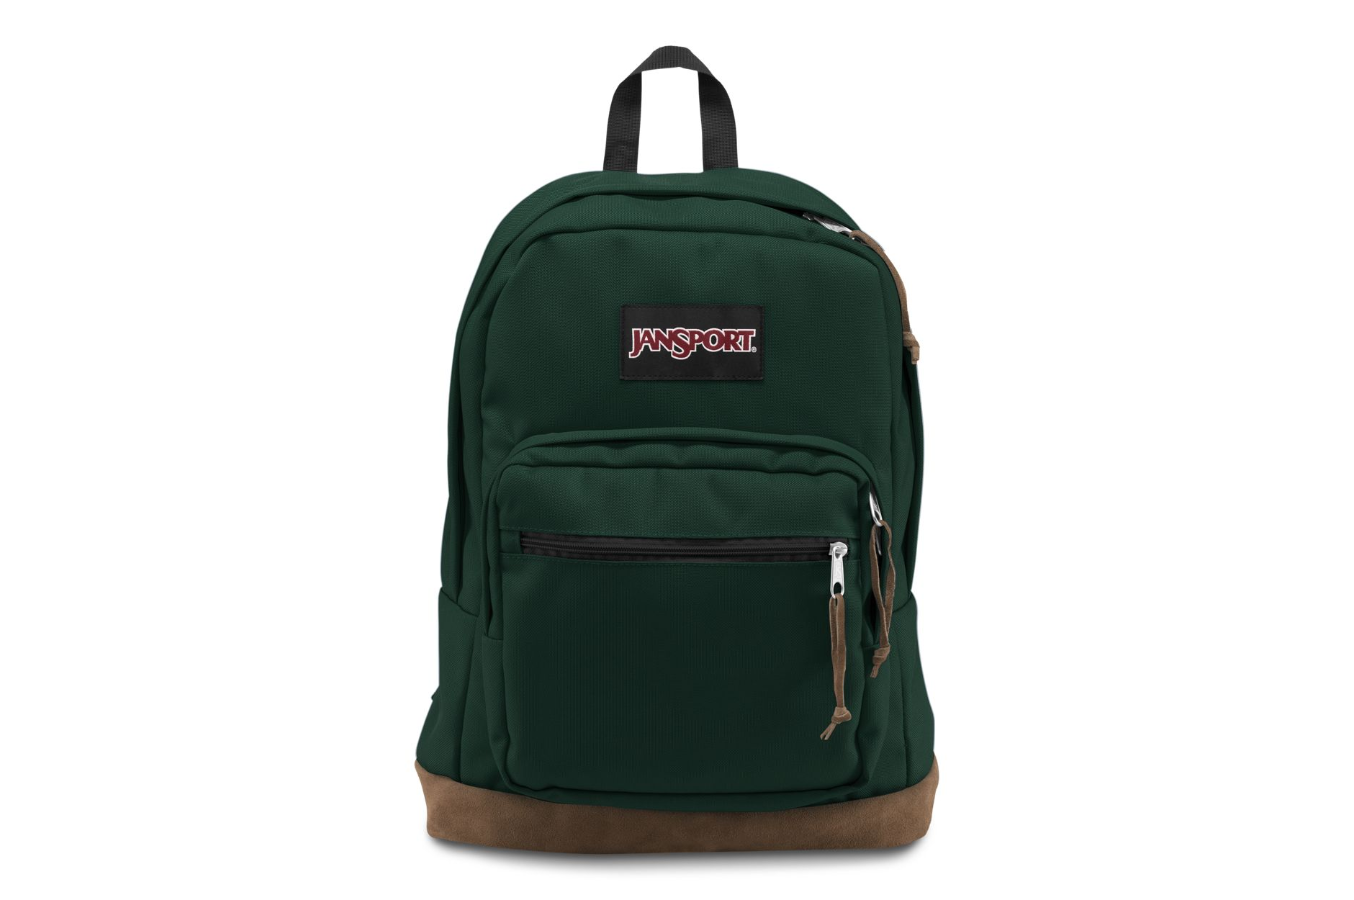 pine grove green jansport backpack